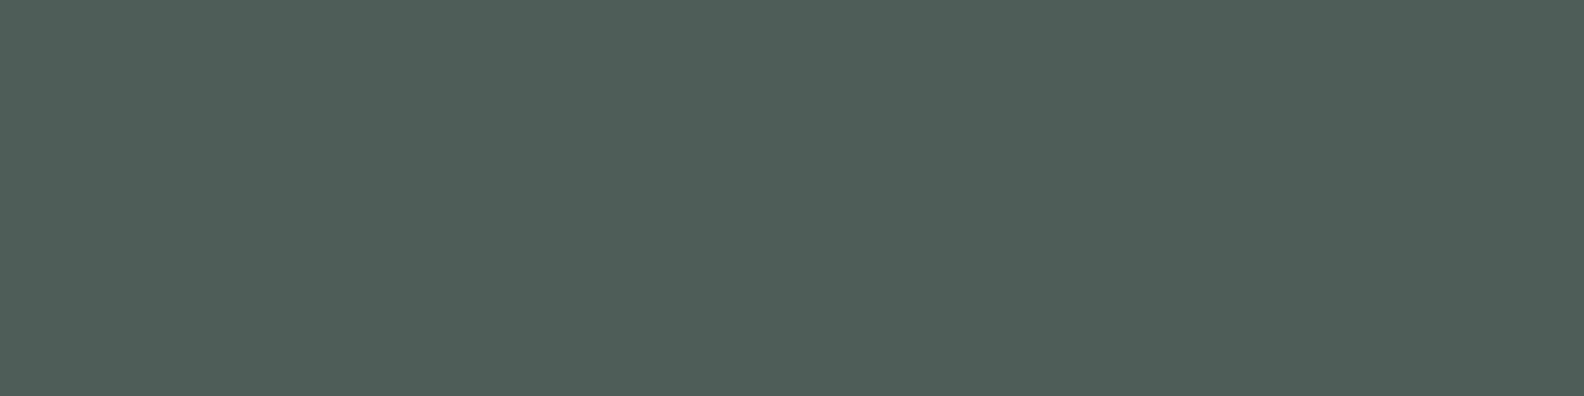 1584x396 Feldgrau Solid Color Background